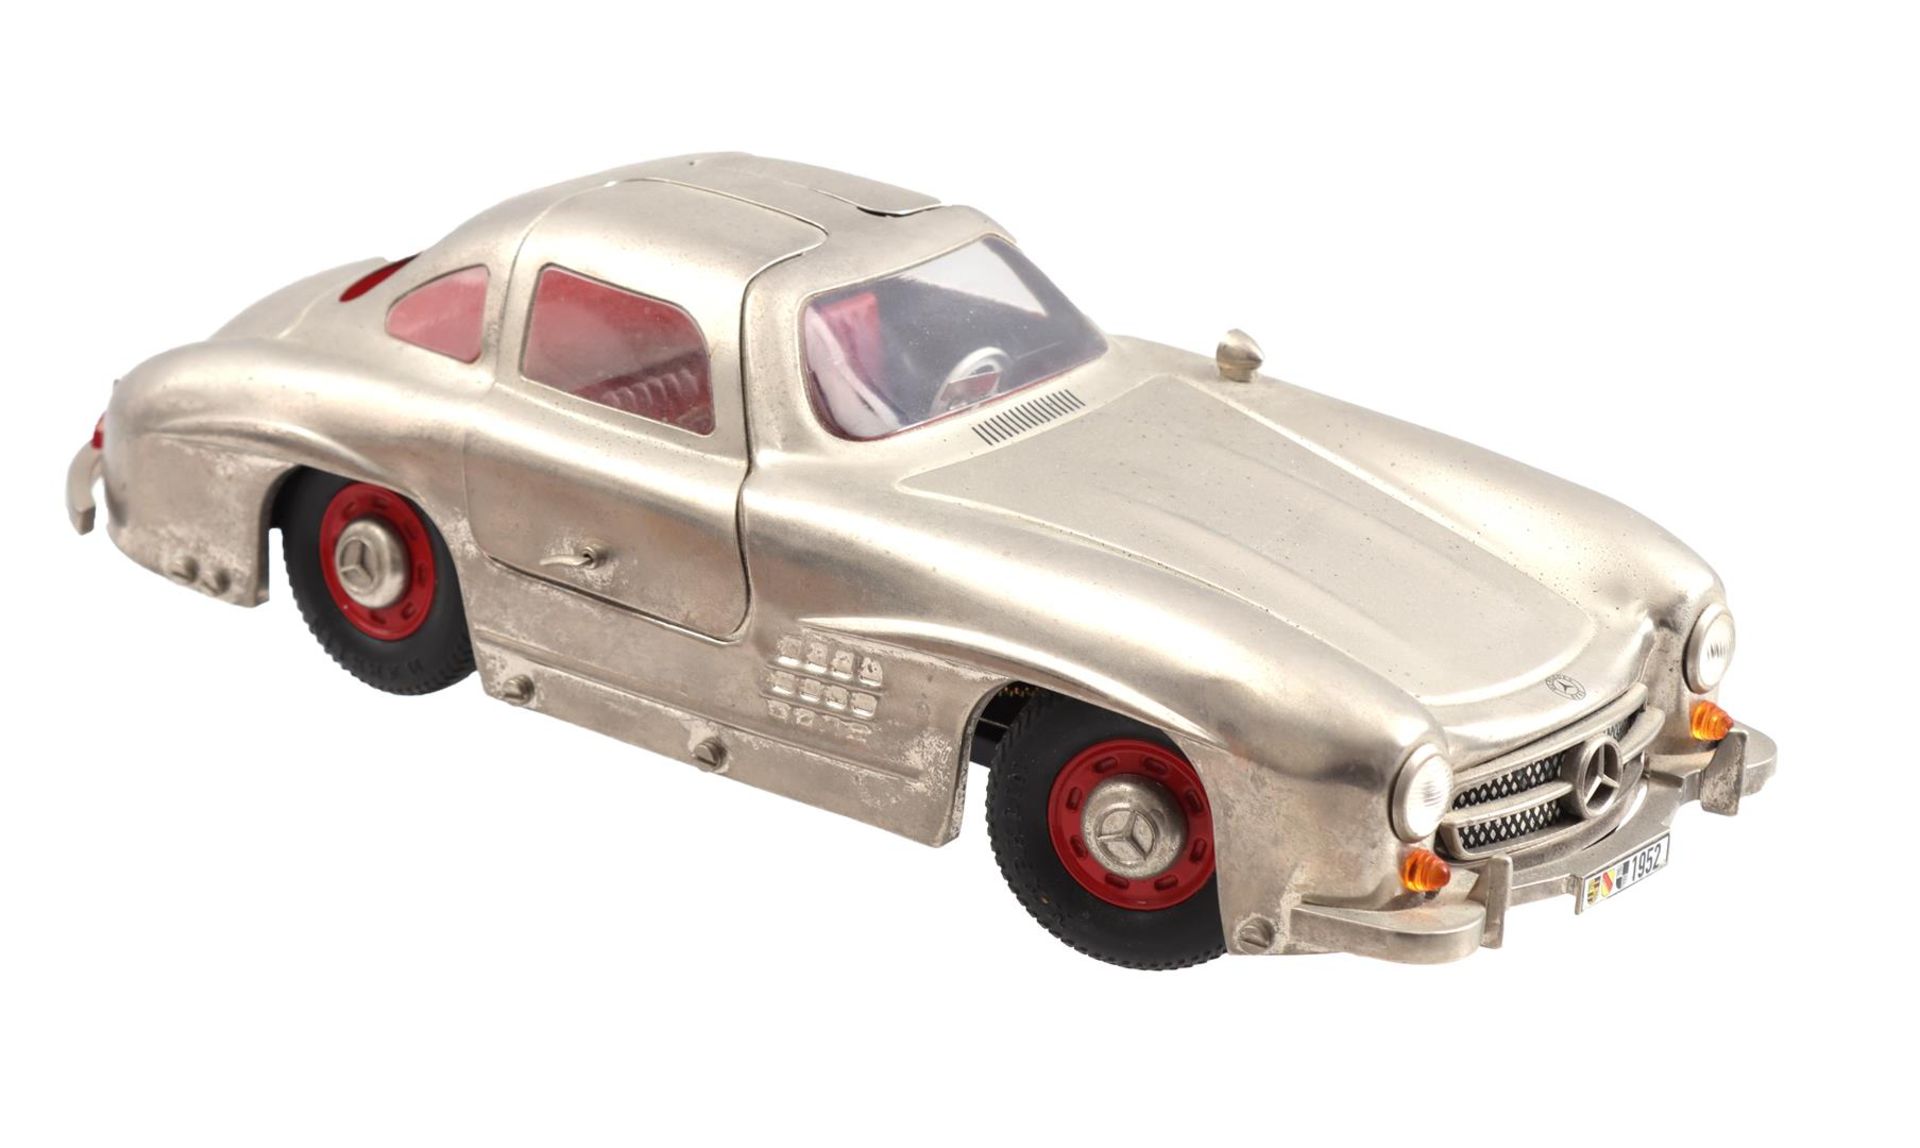 Märklin Mercedes scale model